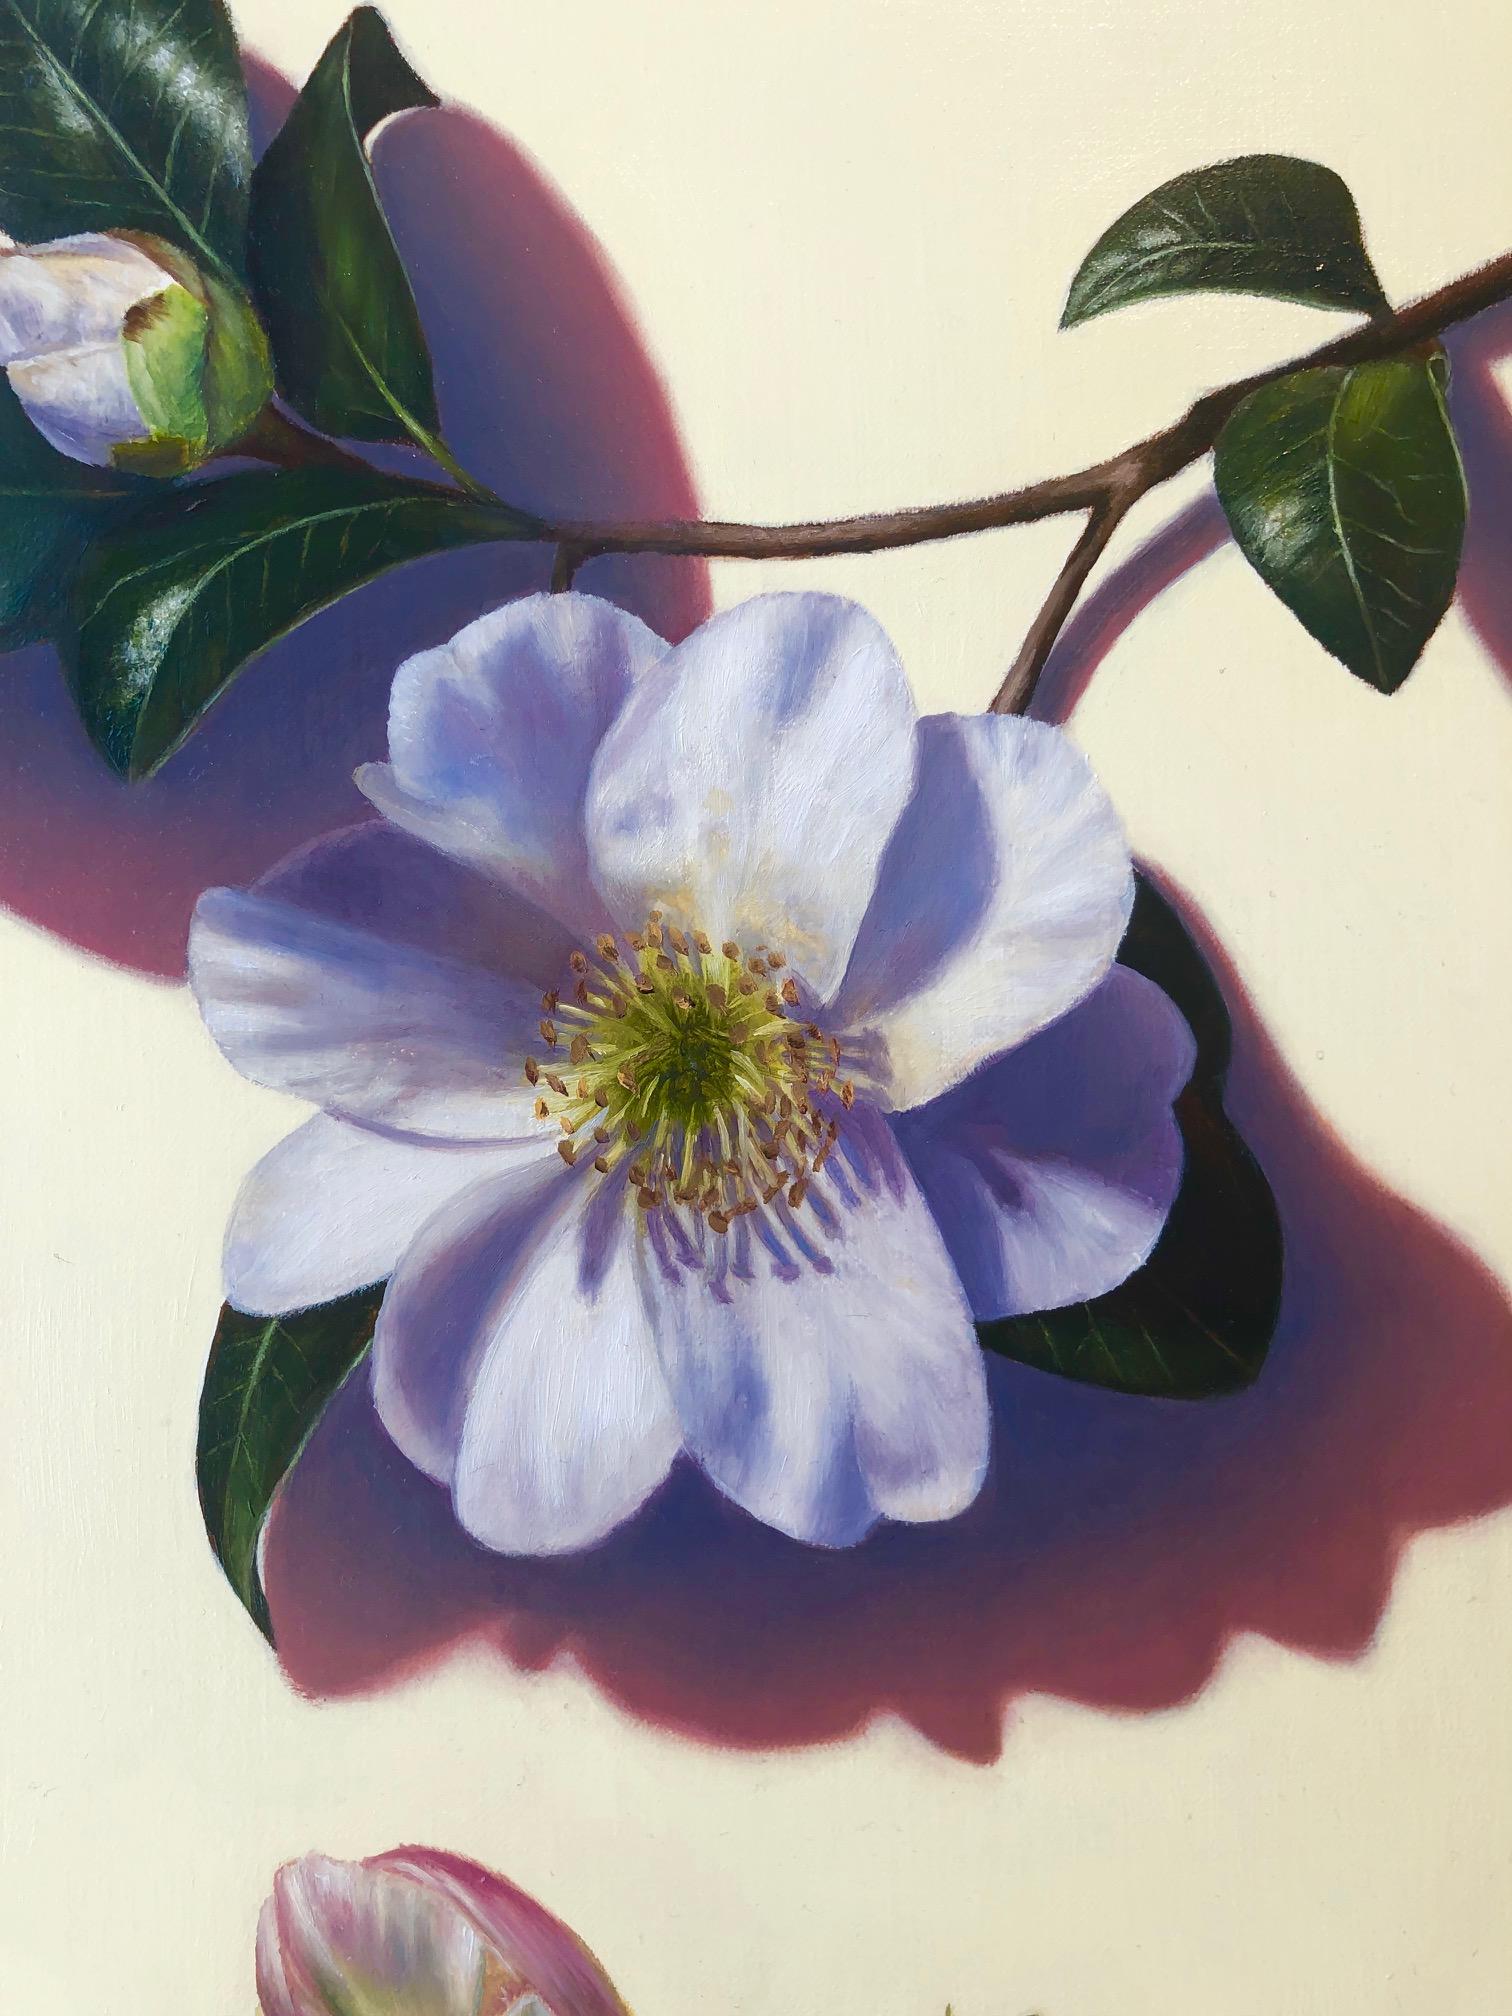 Beauty Above Me, Beauty Below Me / garden portrait lemon & magnolia - Contemporary Painting by Elizabeth Barlow